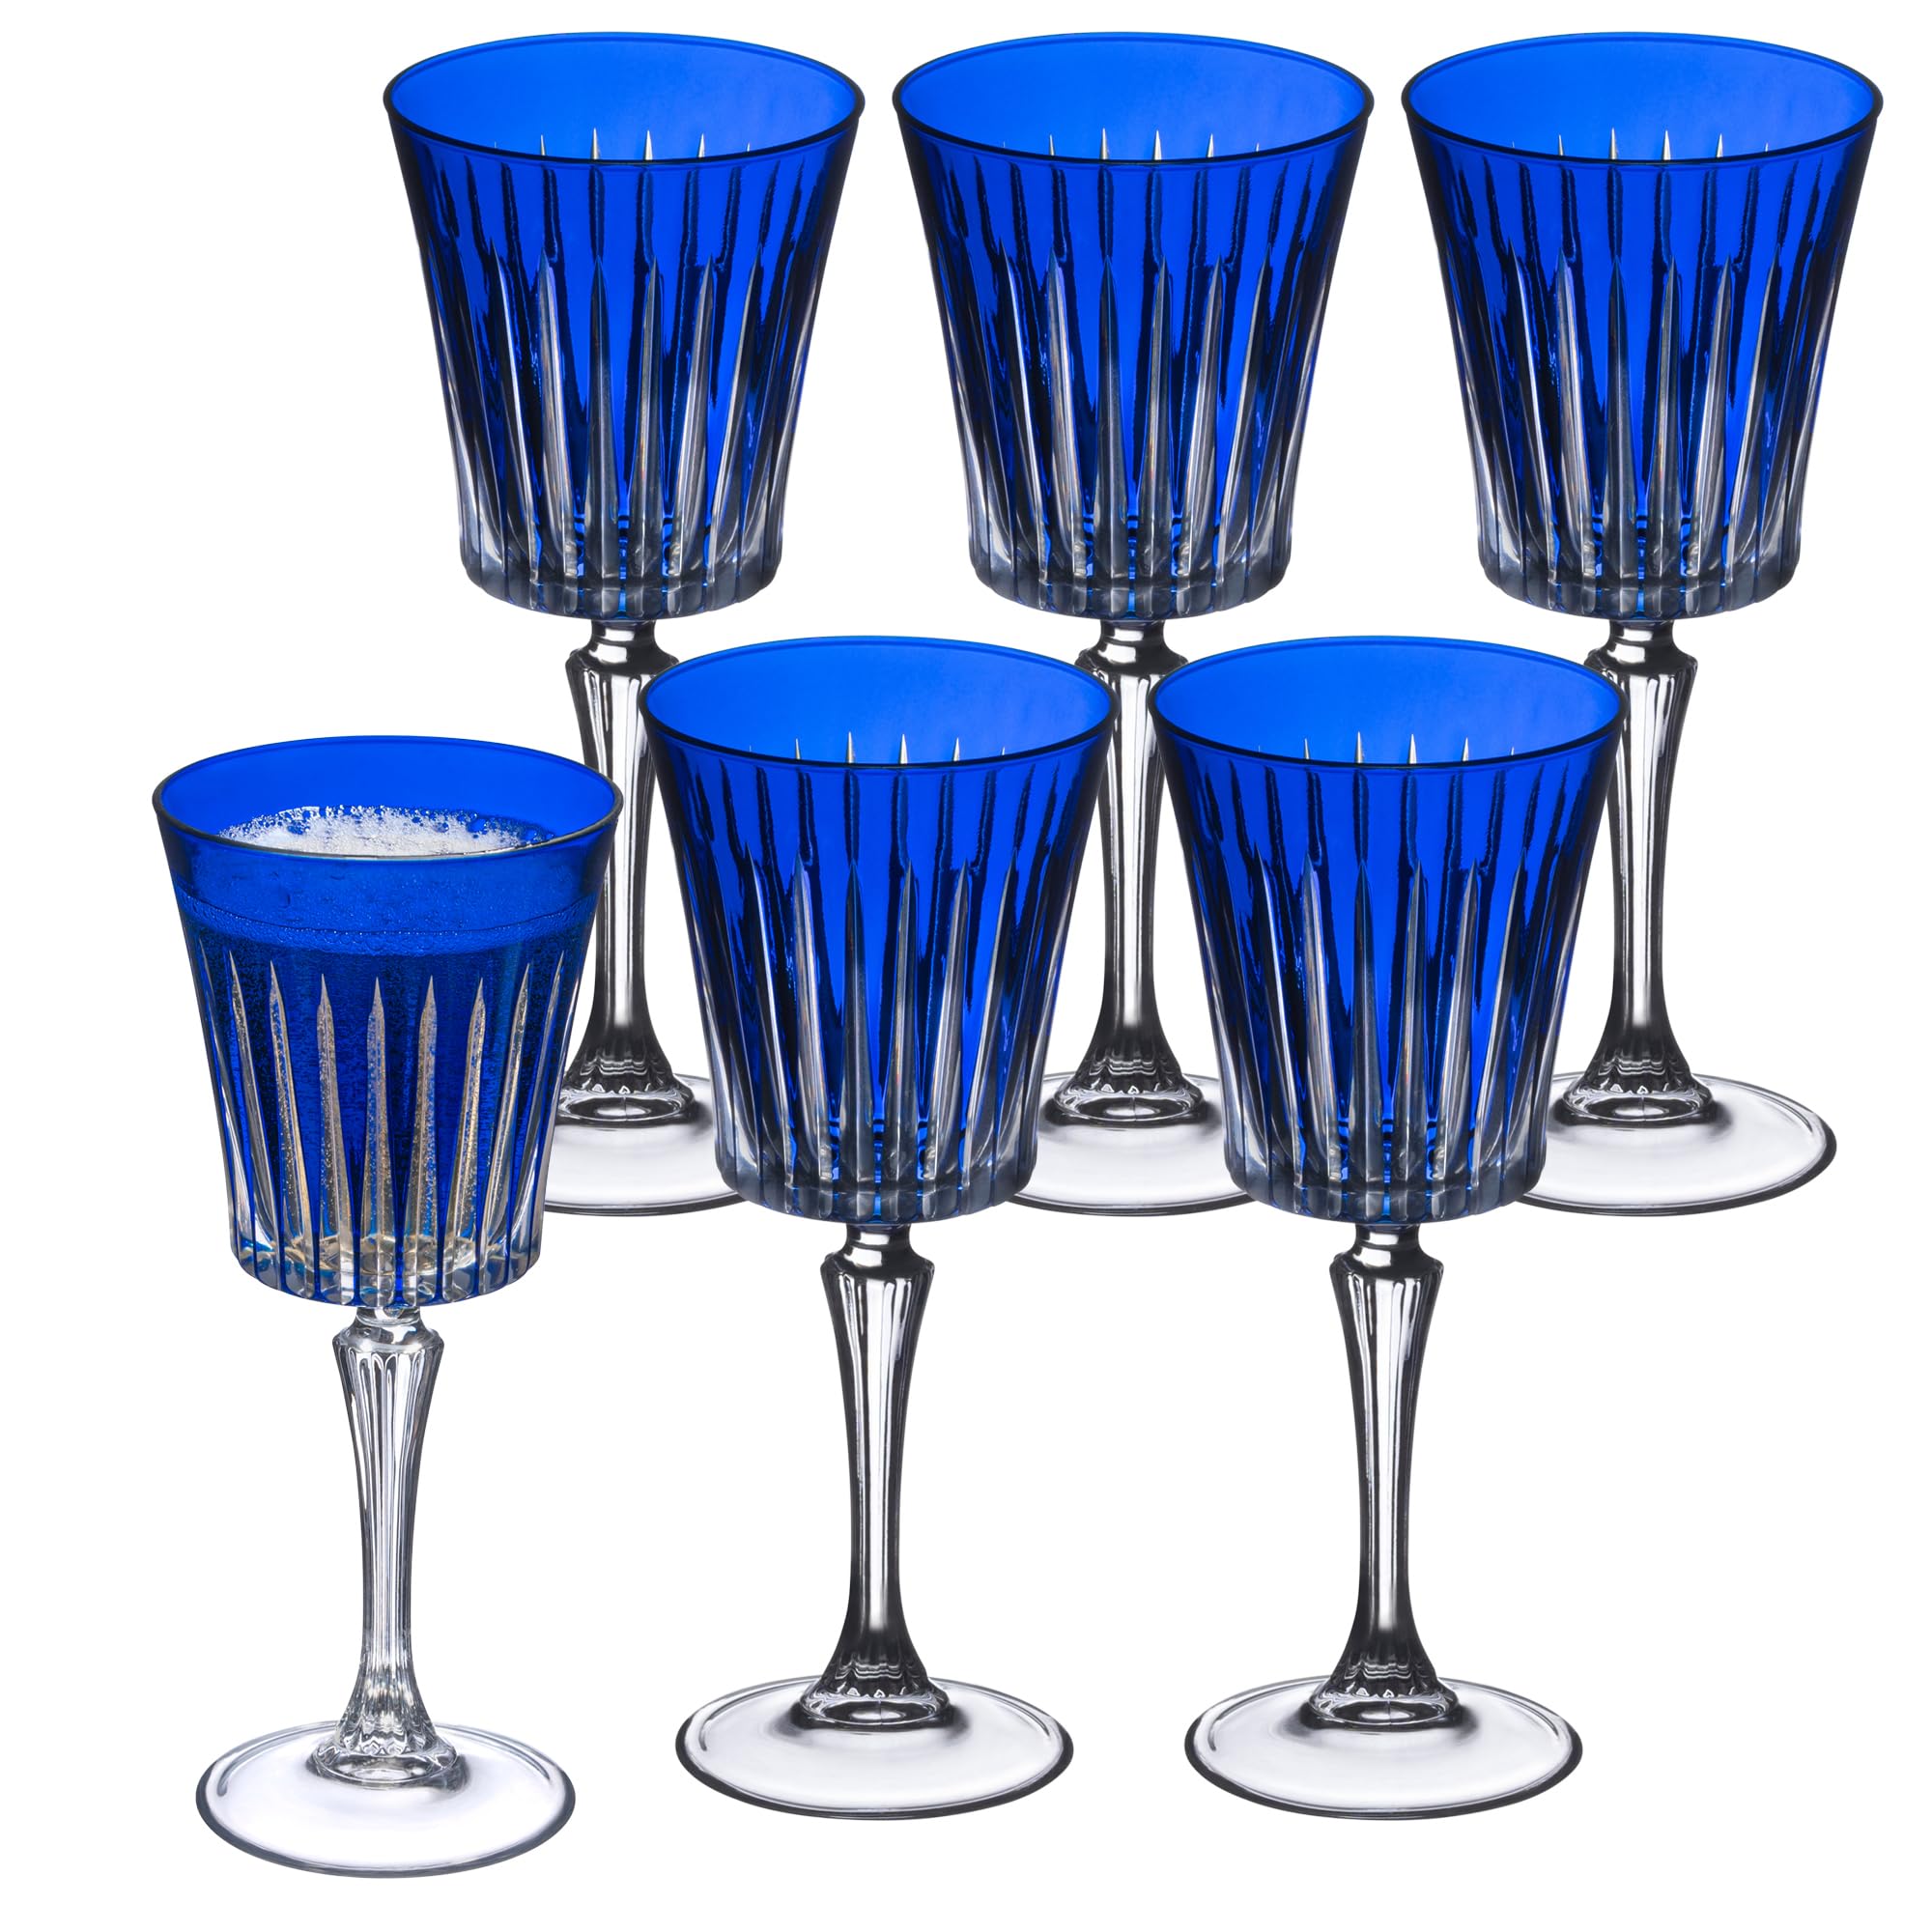 Barski European Colored Wine Glasses - Set of 6 Wine Goblets for Red Wine or White Wine - Elegant Colored Glassware Water Goblets - Gift Ready Colored Stemware, Colorful Glasses, 10 oz, Cobalt (Blue)